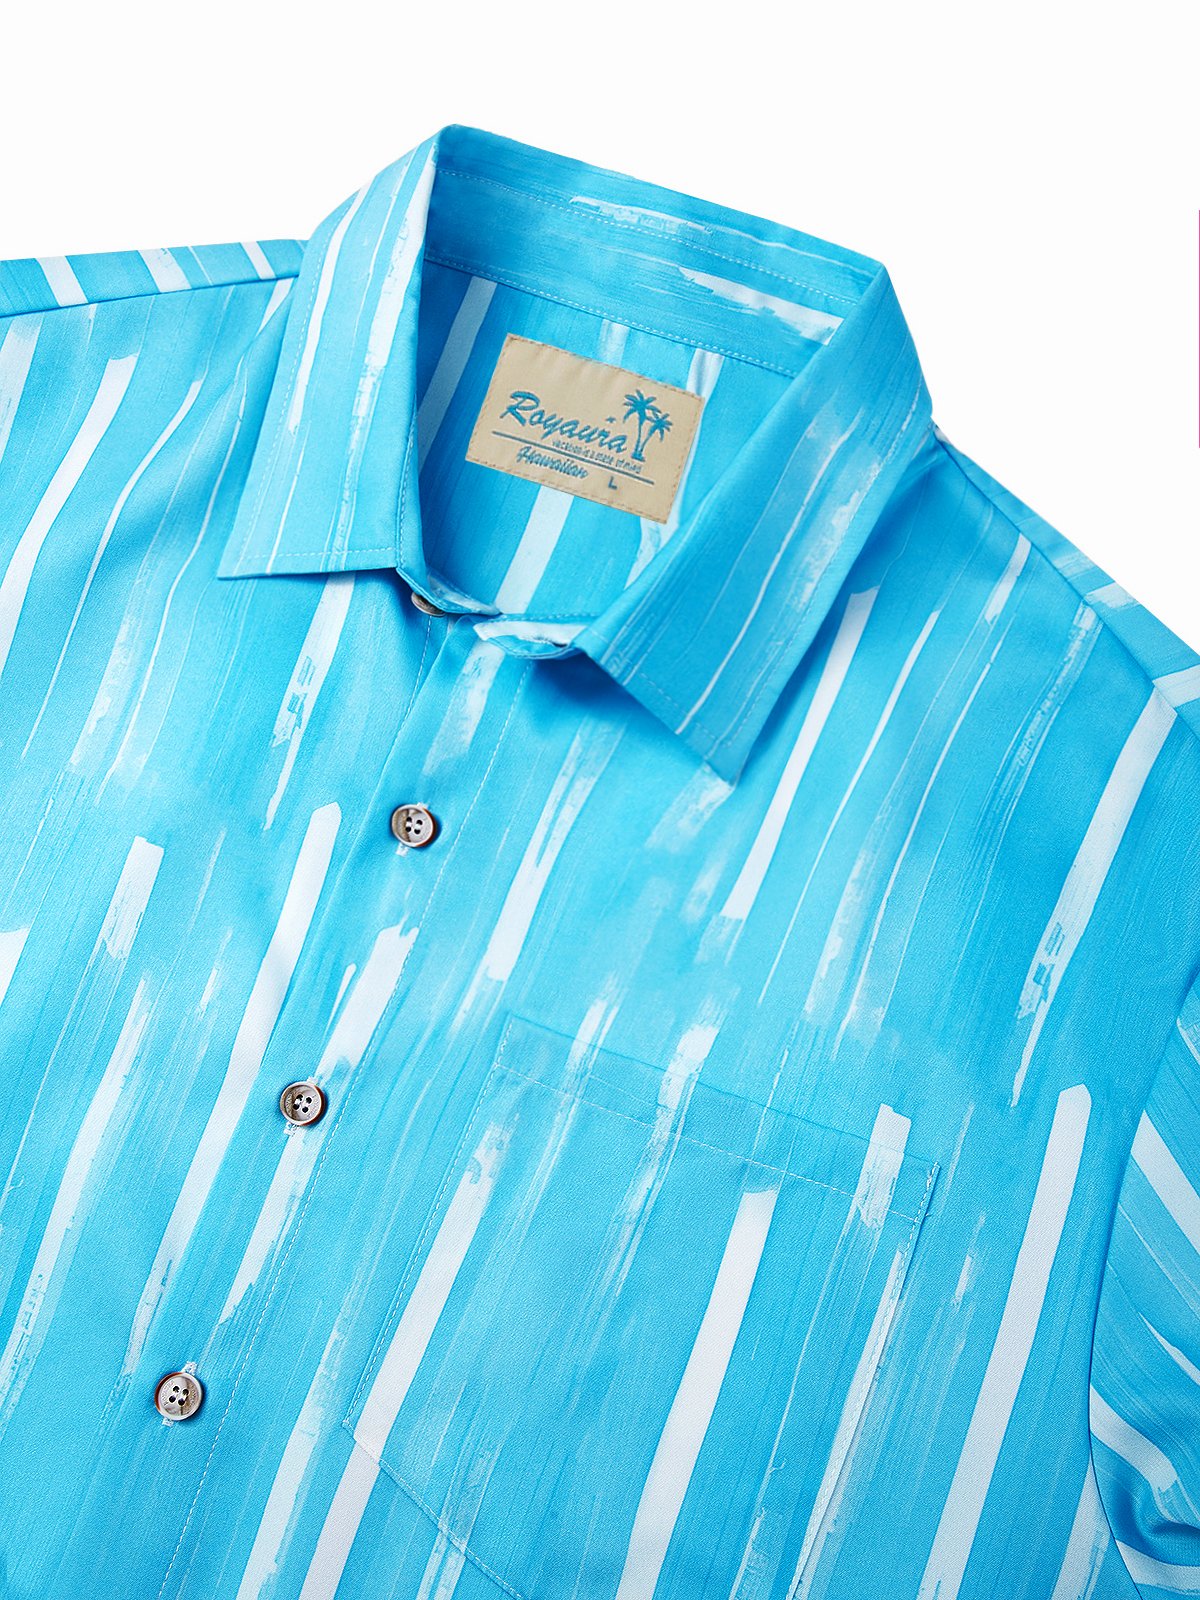 Royaura® Geometric Art Men's Hawaiian Shirt Abstract Stripe Care Pocket Camping Shirt Big Tall